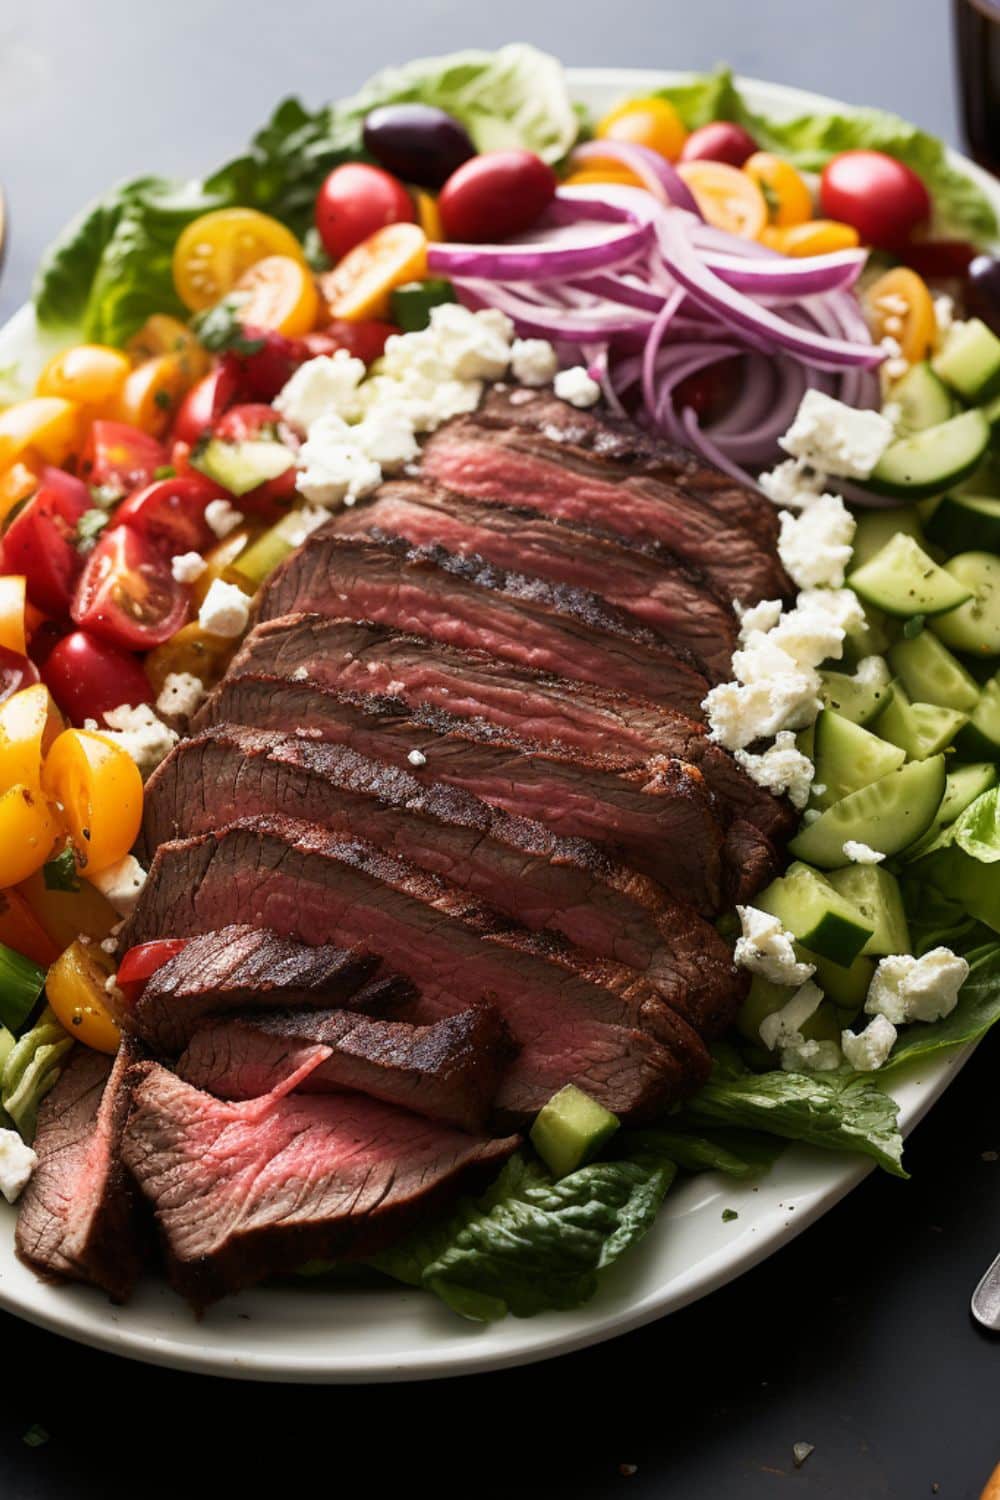 Greek steak surrounded by chopped veggies